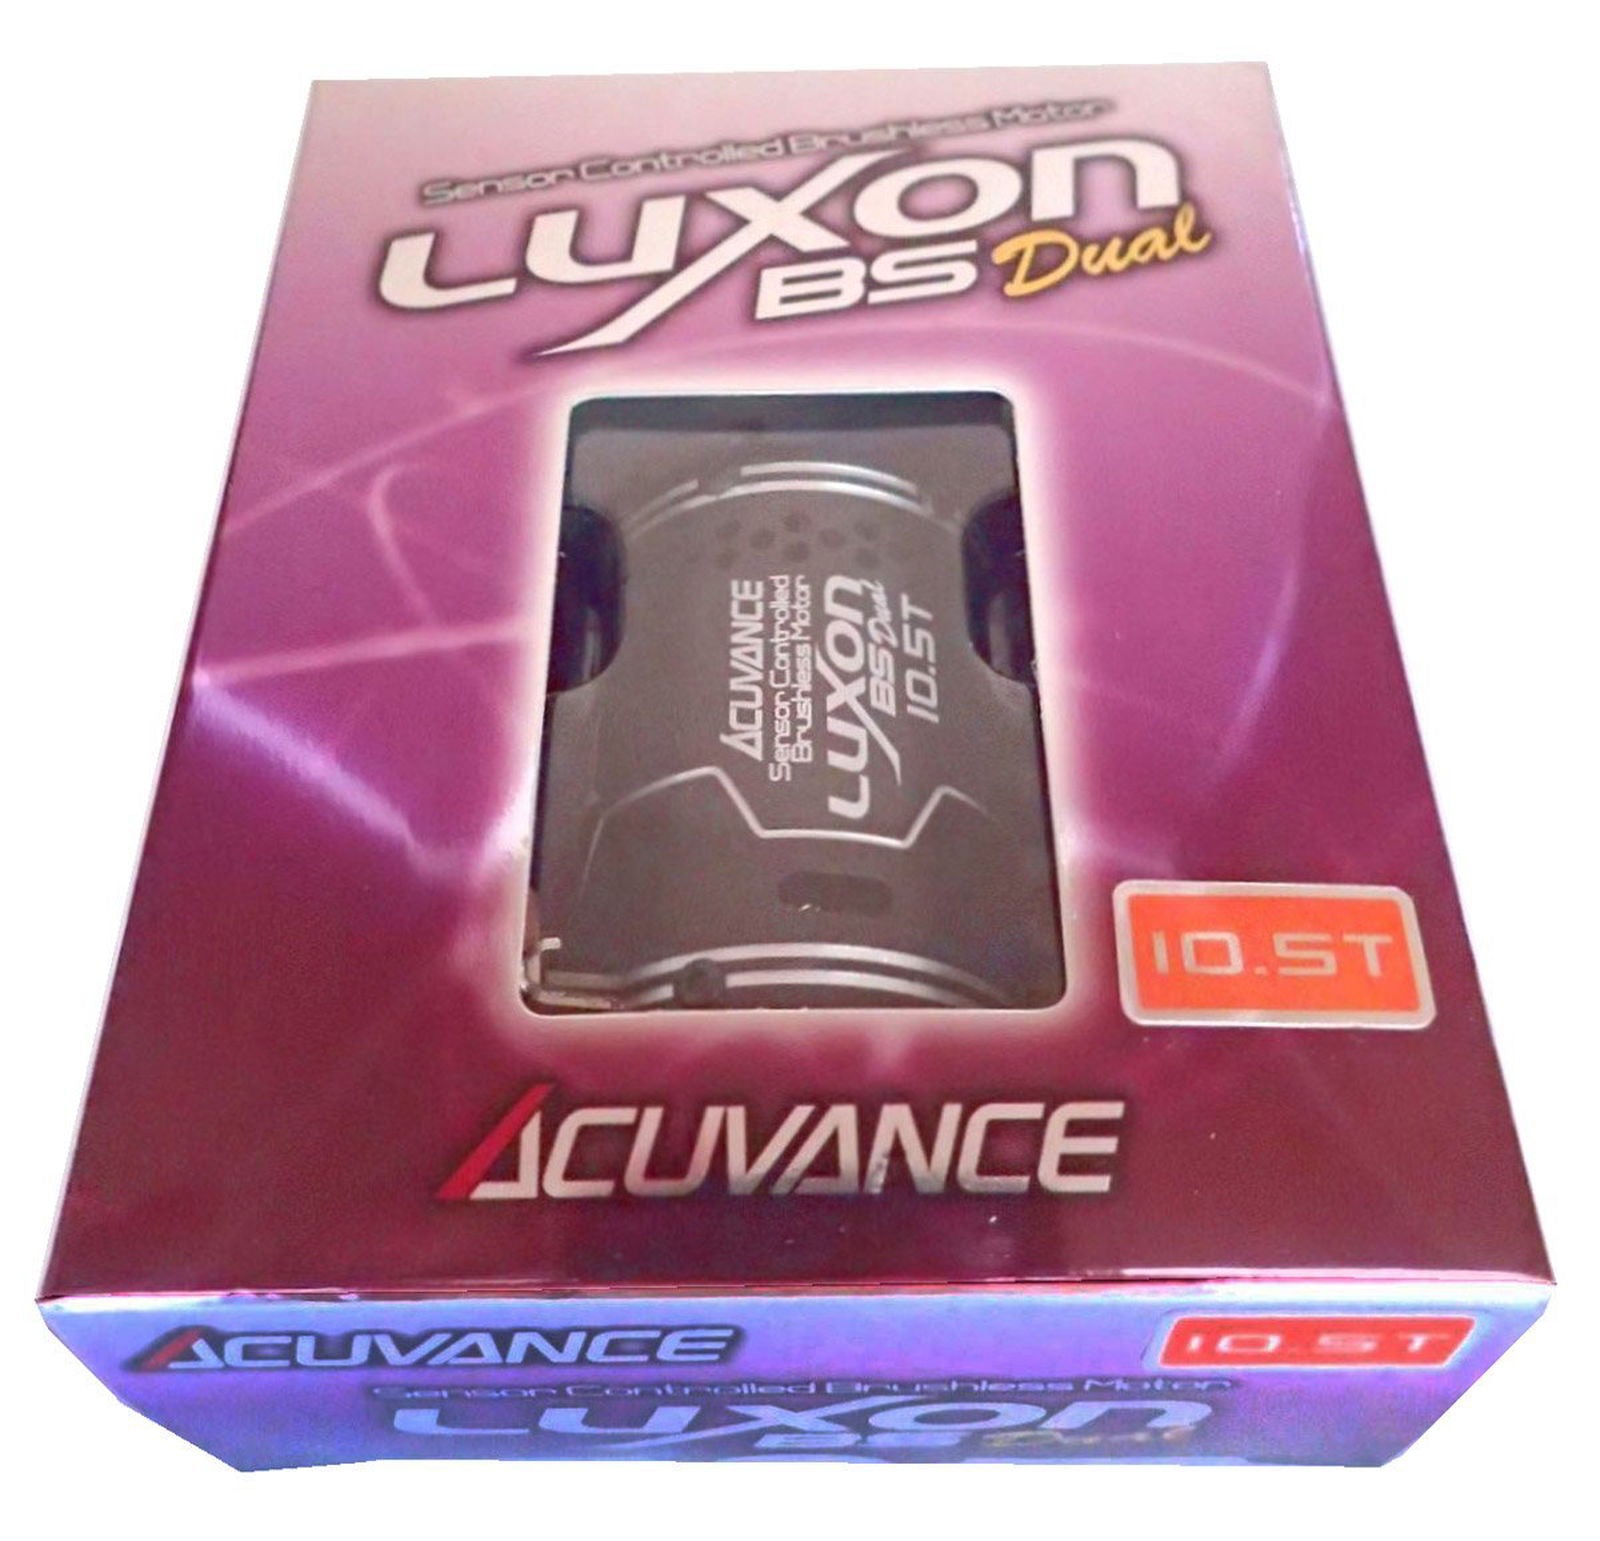 Acuvance (Keyence) Luxon BS Dual 10.5T with COA 5G (FREE!) - BanzaiHobby